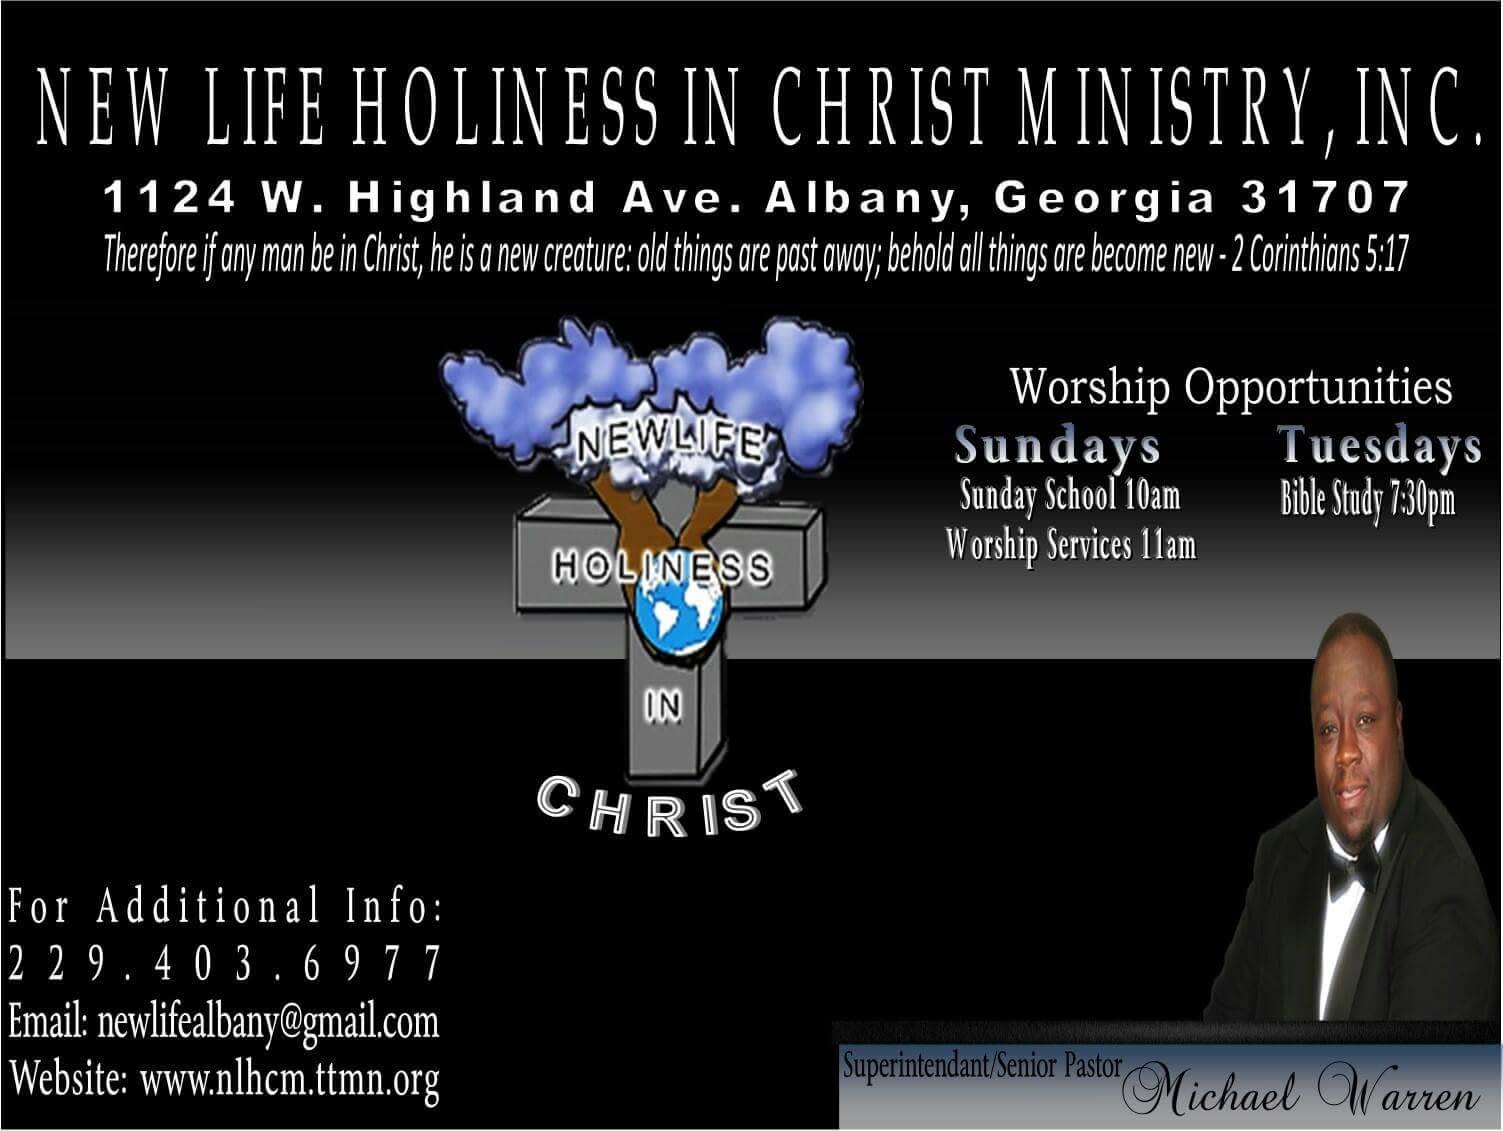 New Life Apostolic Church Ministry, Inc